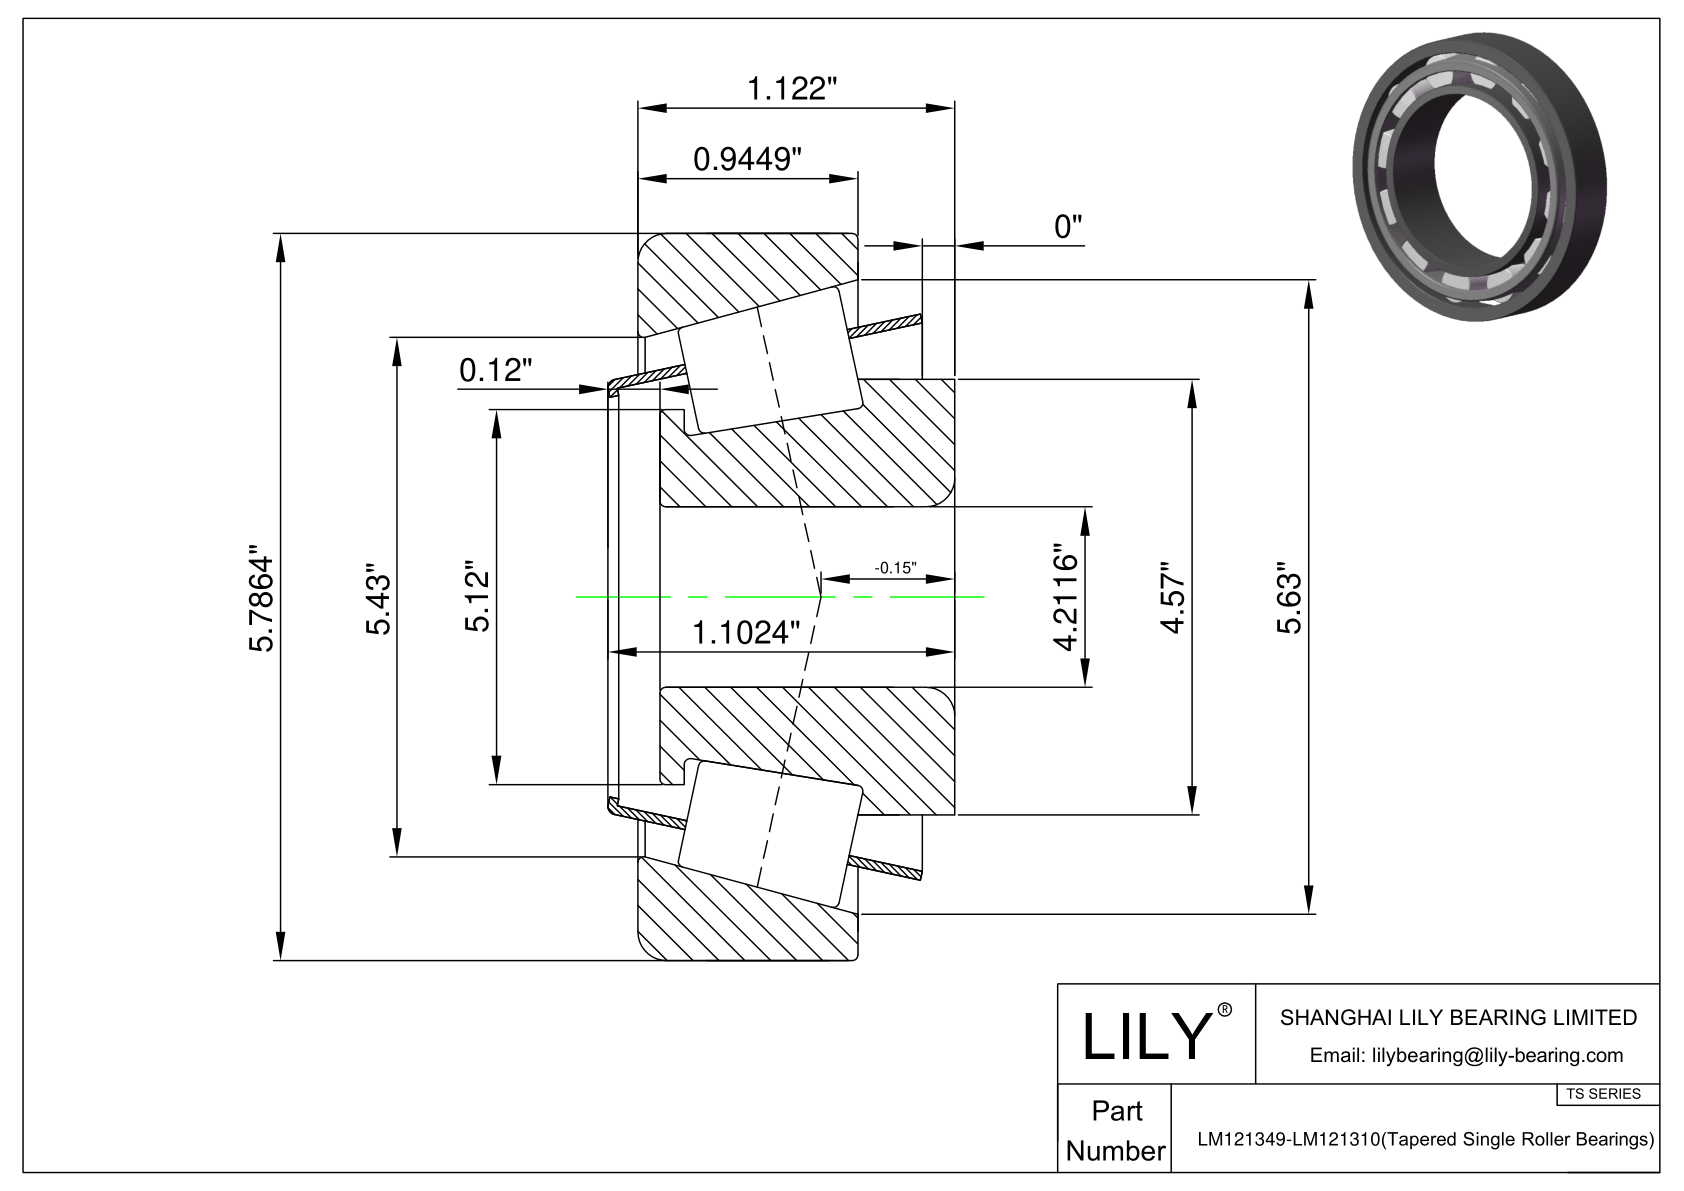 LM121349-LM121310 TS系列(圆锥单滚子轴承)(英制) CAD图形